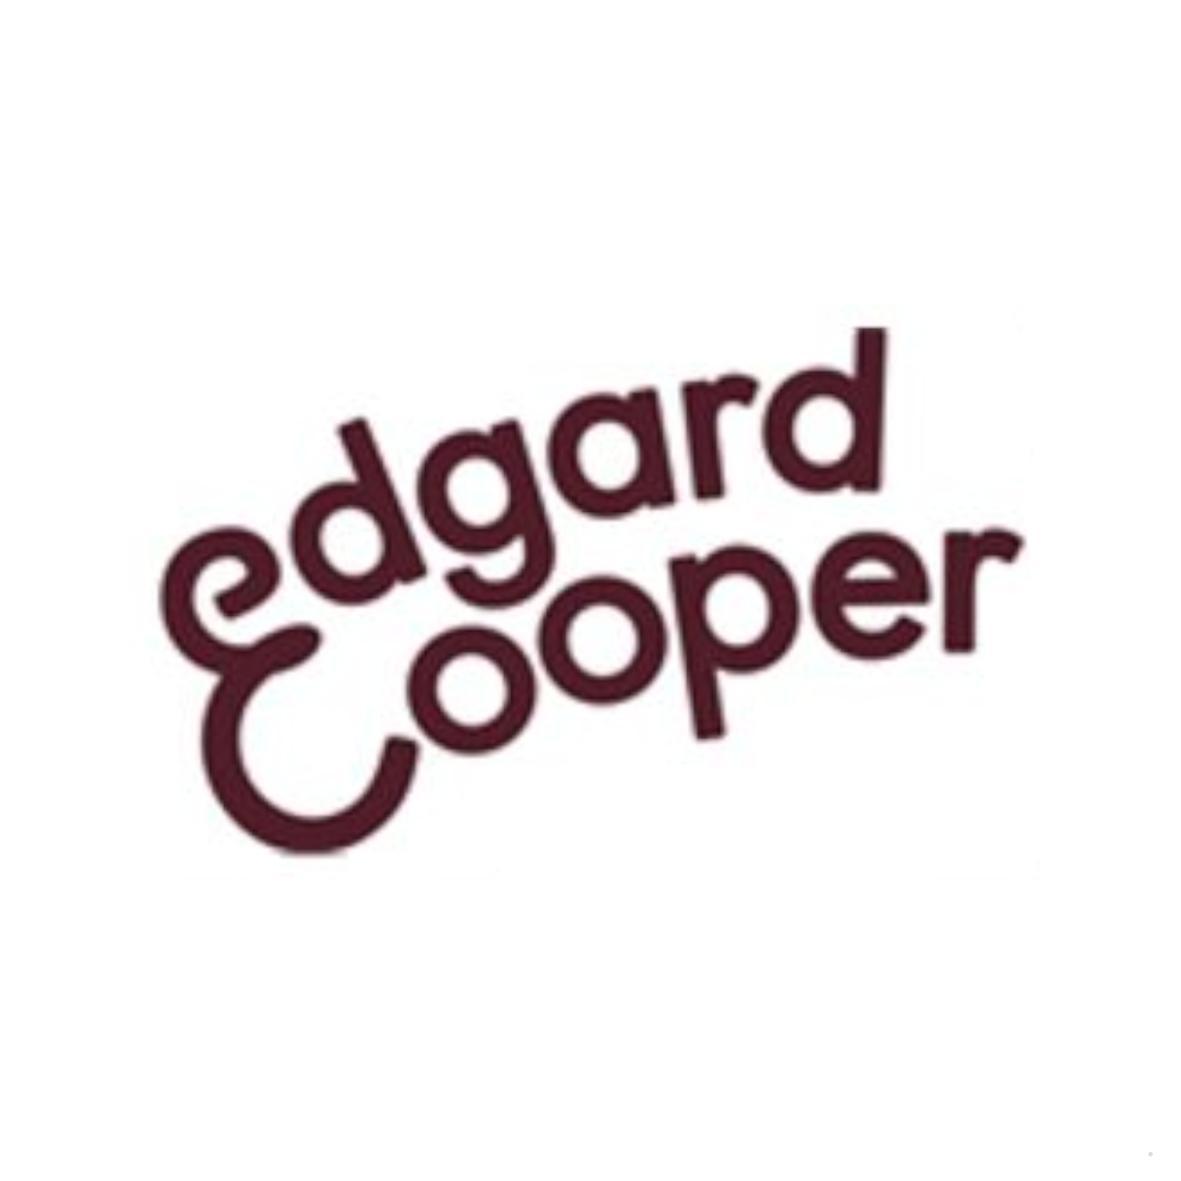 EDGARD COOPERlogo